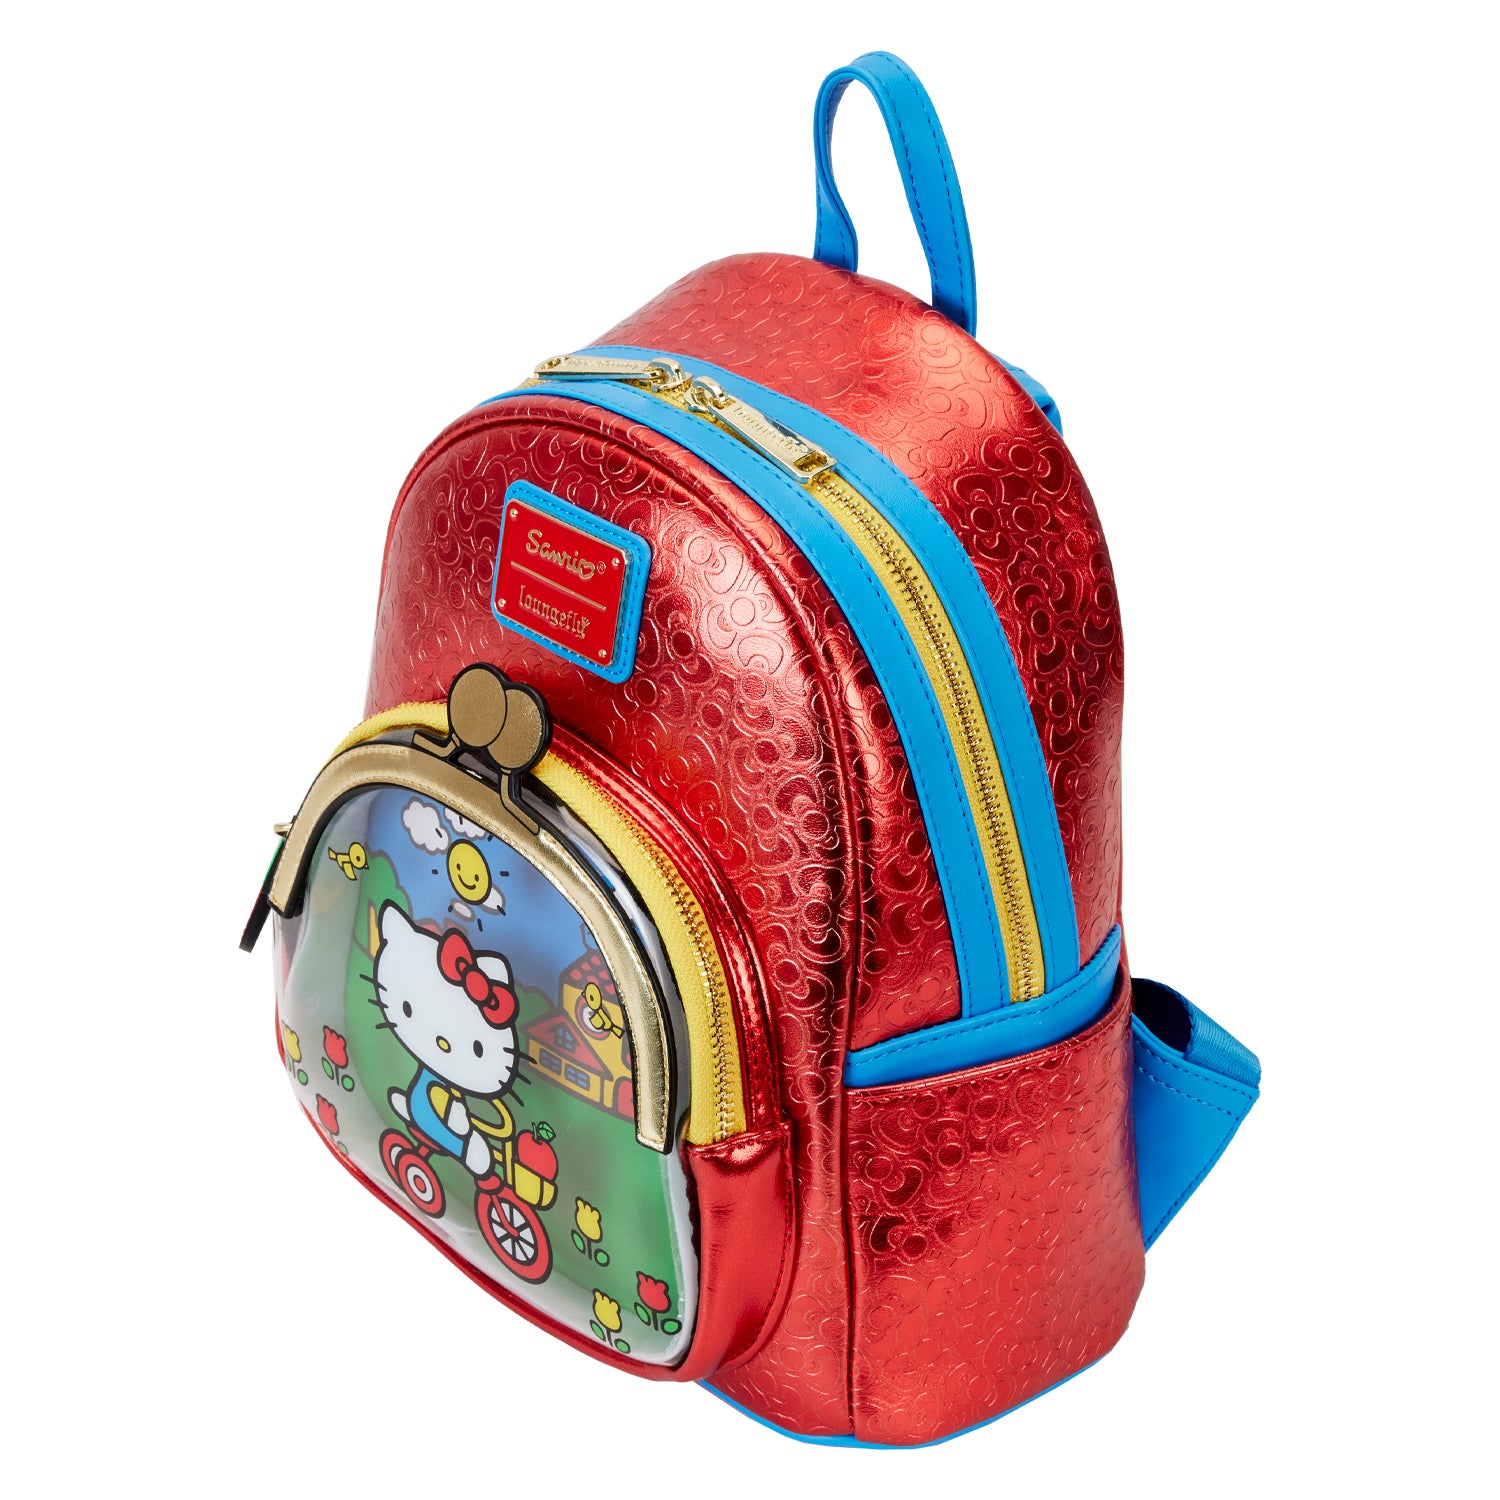 Loungefly x Sanrio Hello Kitty 50th Anniversary Coin Bag Mini Backpack